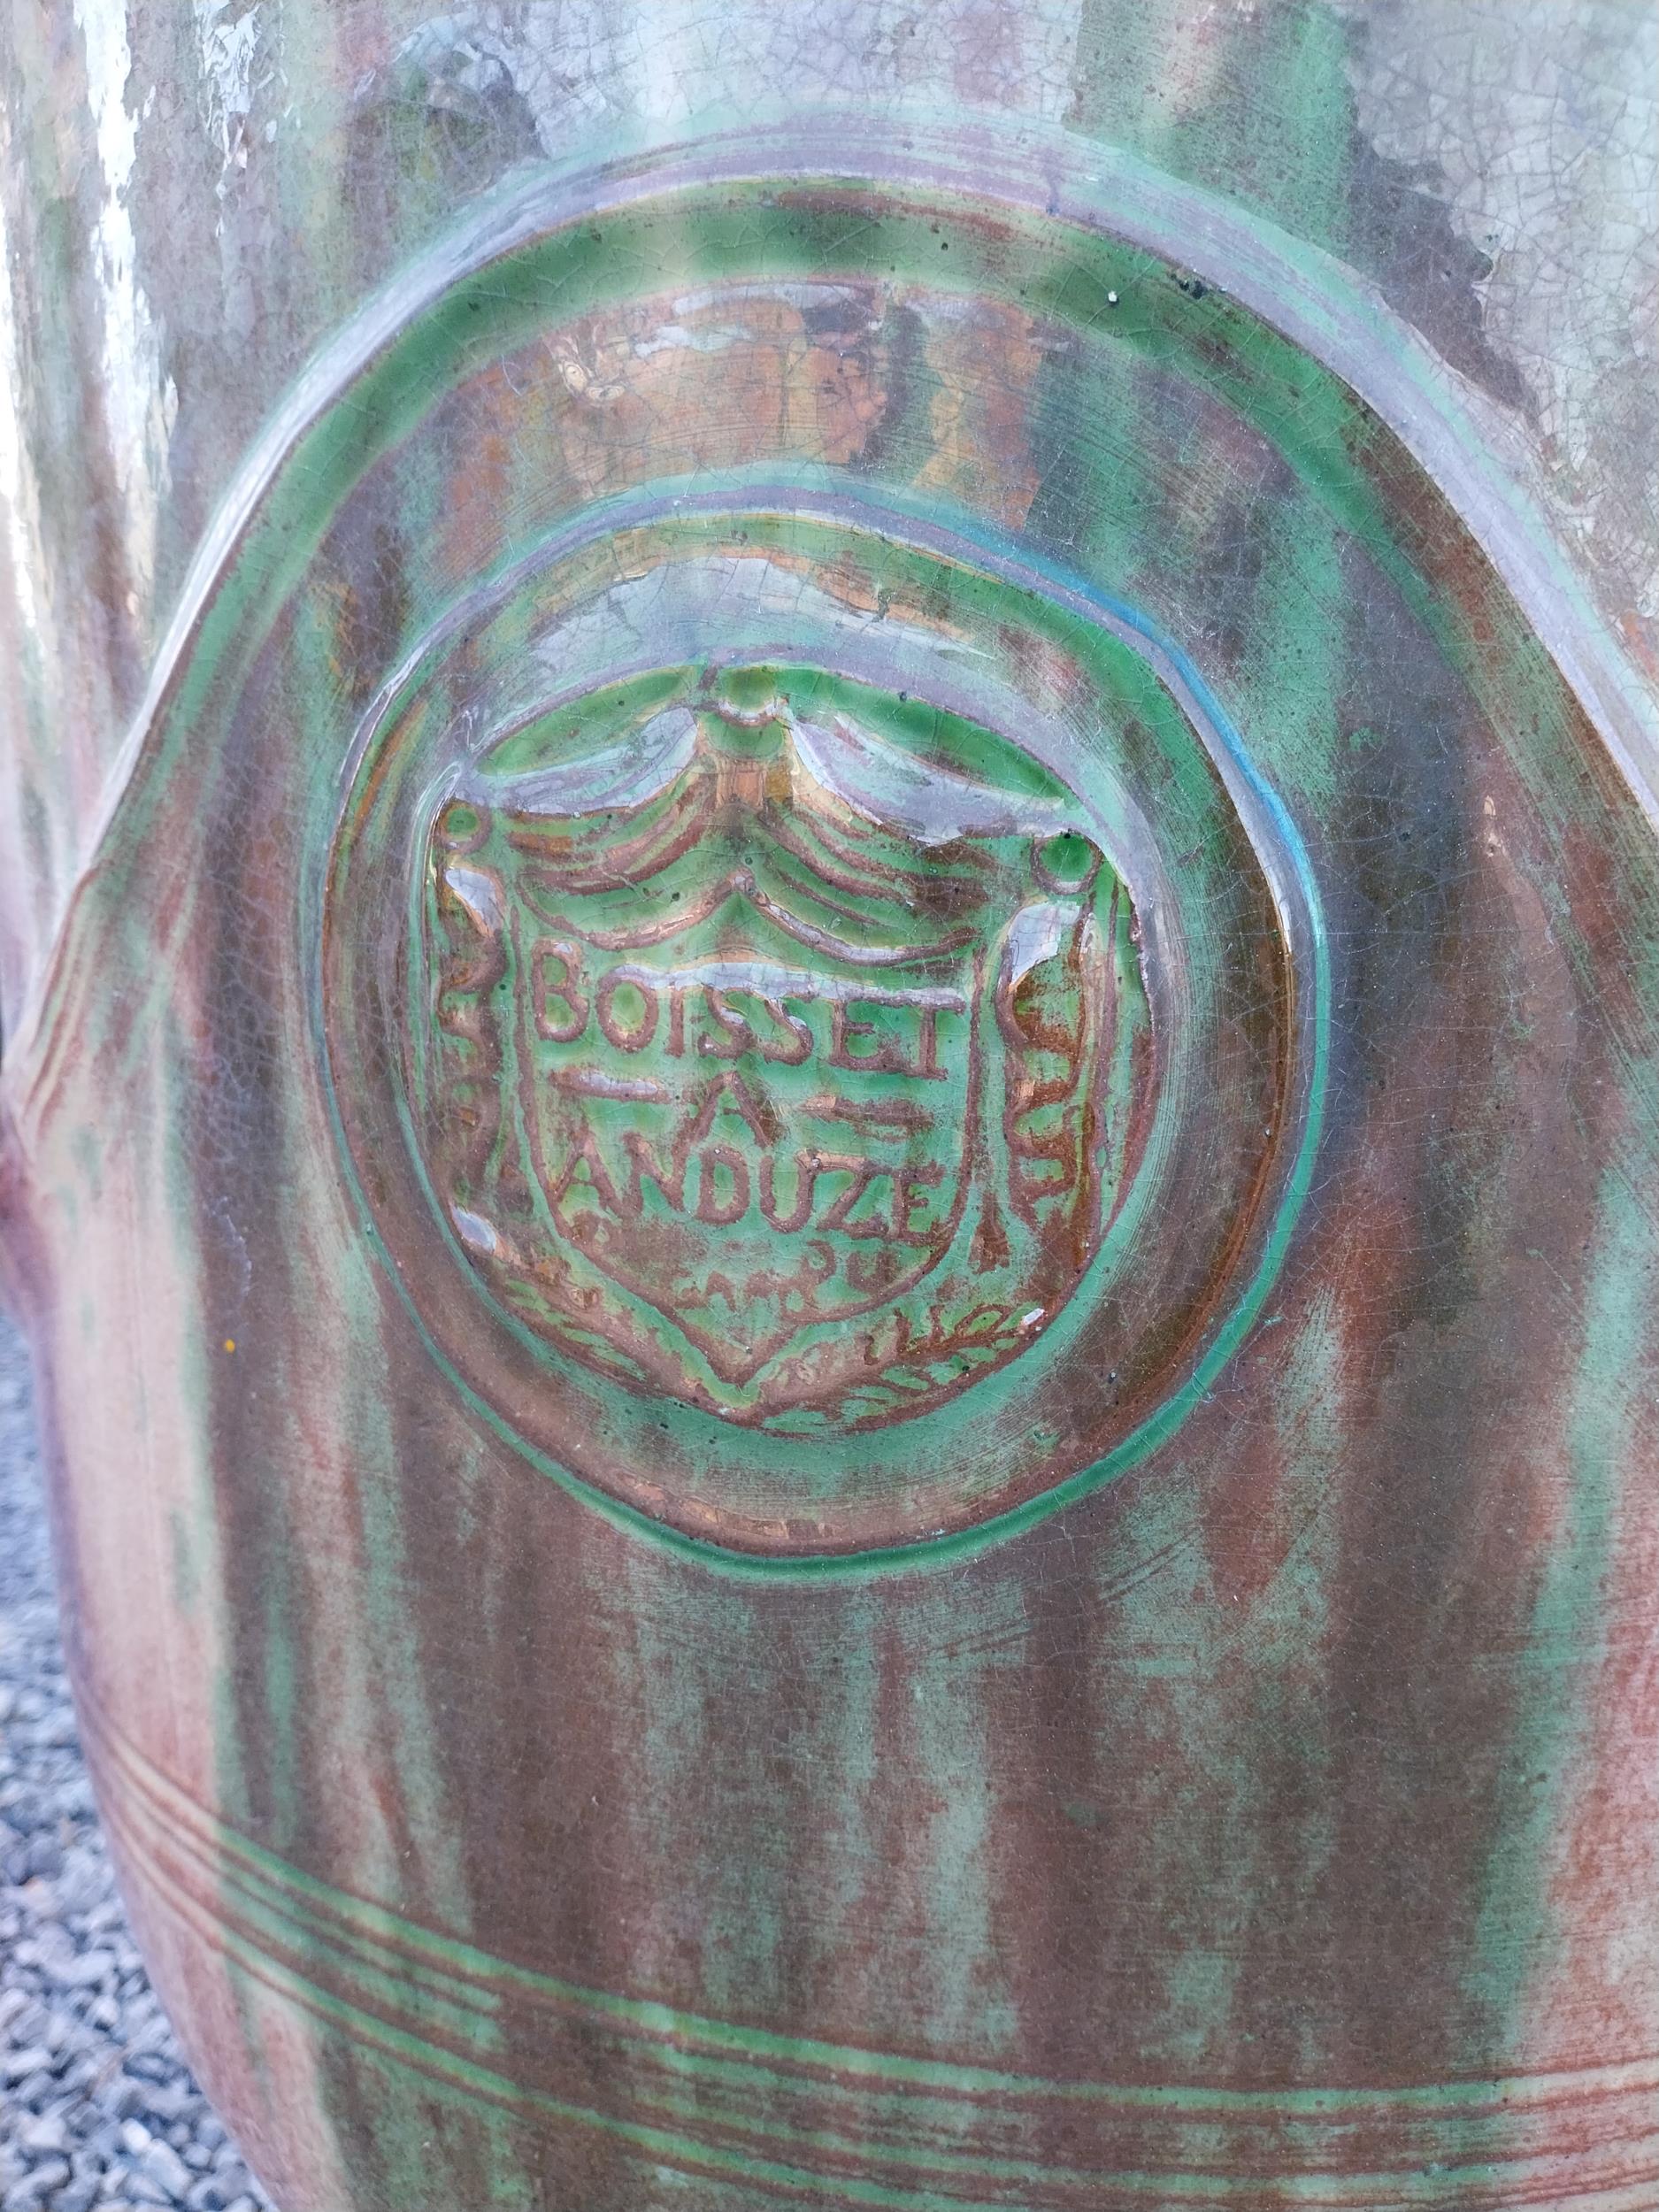 Good quality glazed terracotta Boisset Anduze urn signed (1992) {72 cm H x 56 cm Dia.}. - Image 4 of 9